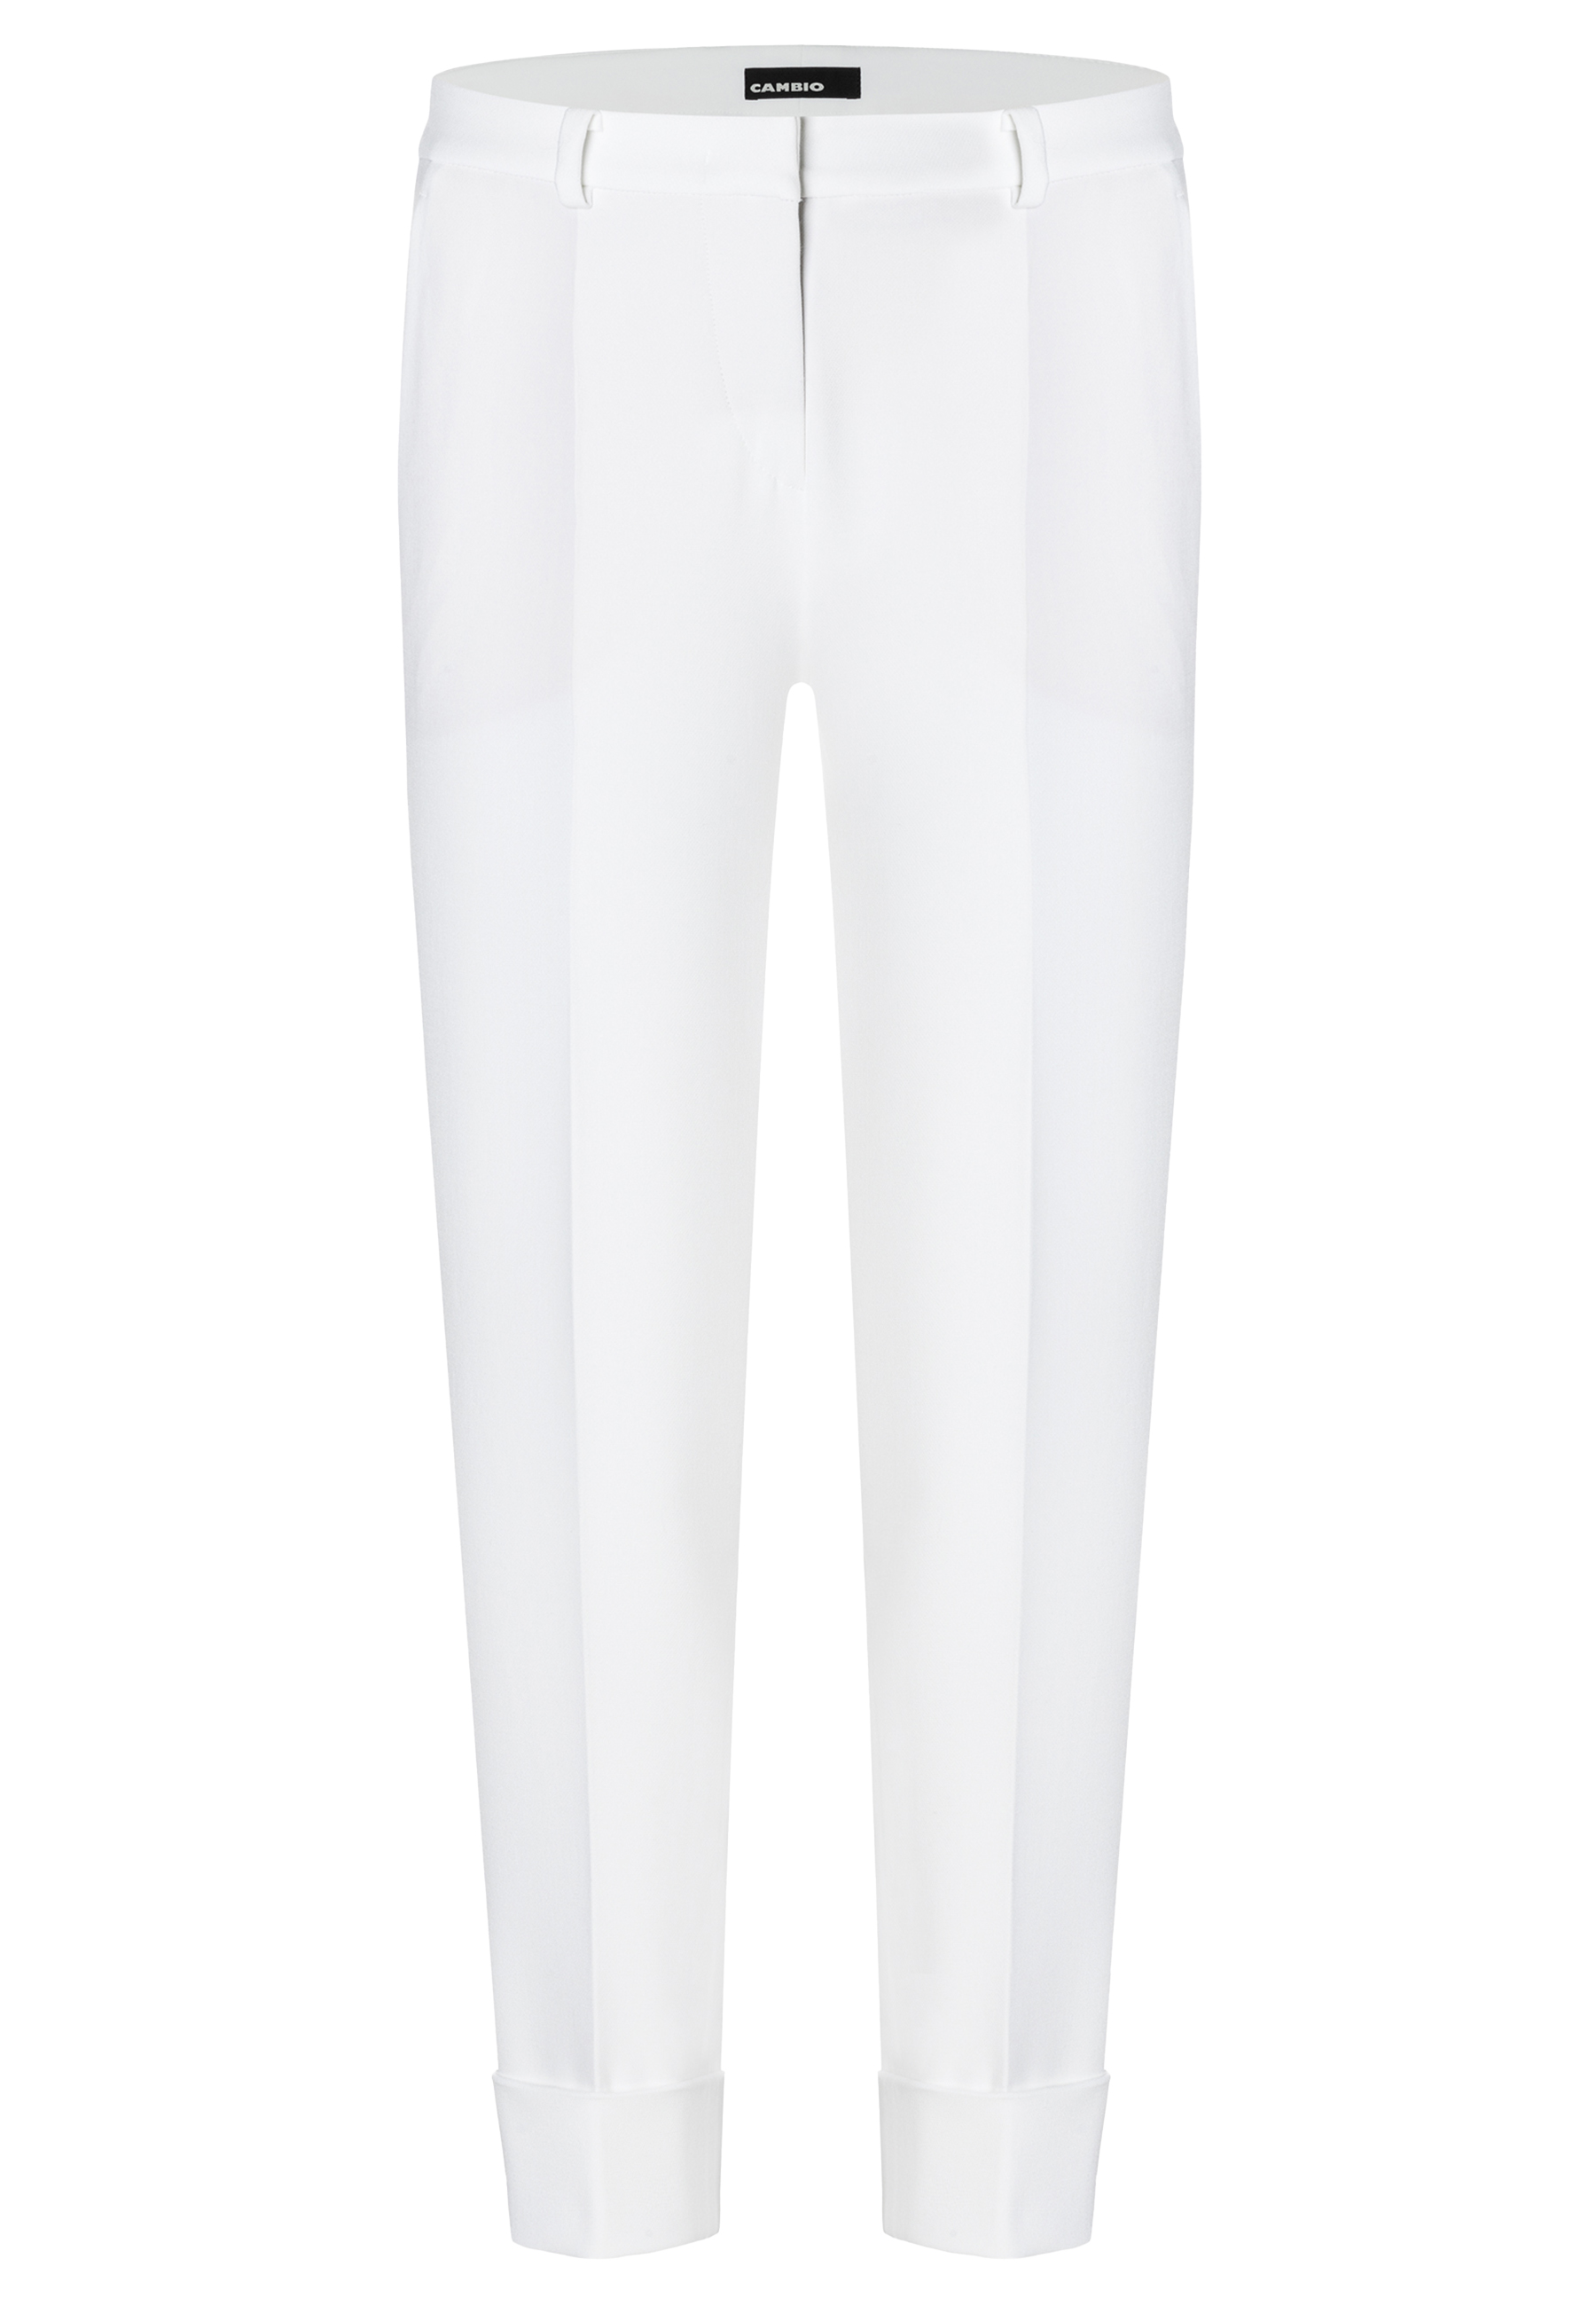 Cambio Broek Off White Polyester maat 38 Krystal pantalons off white